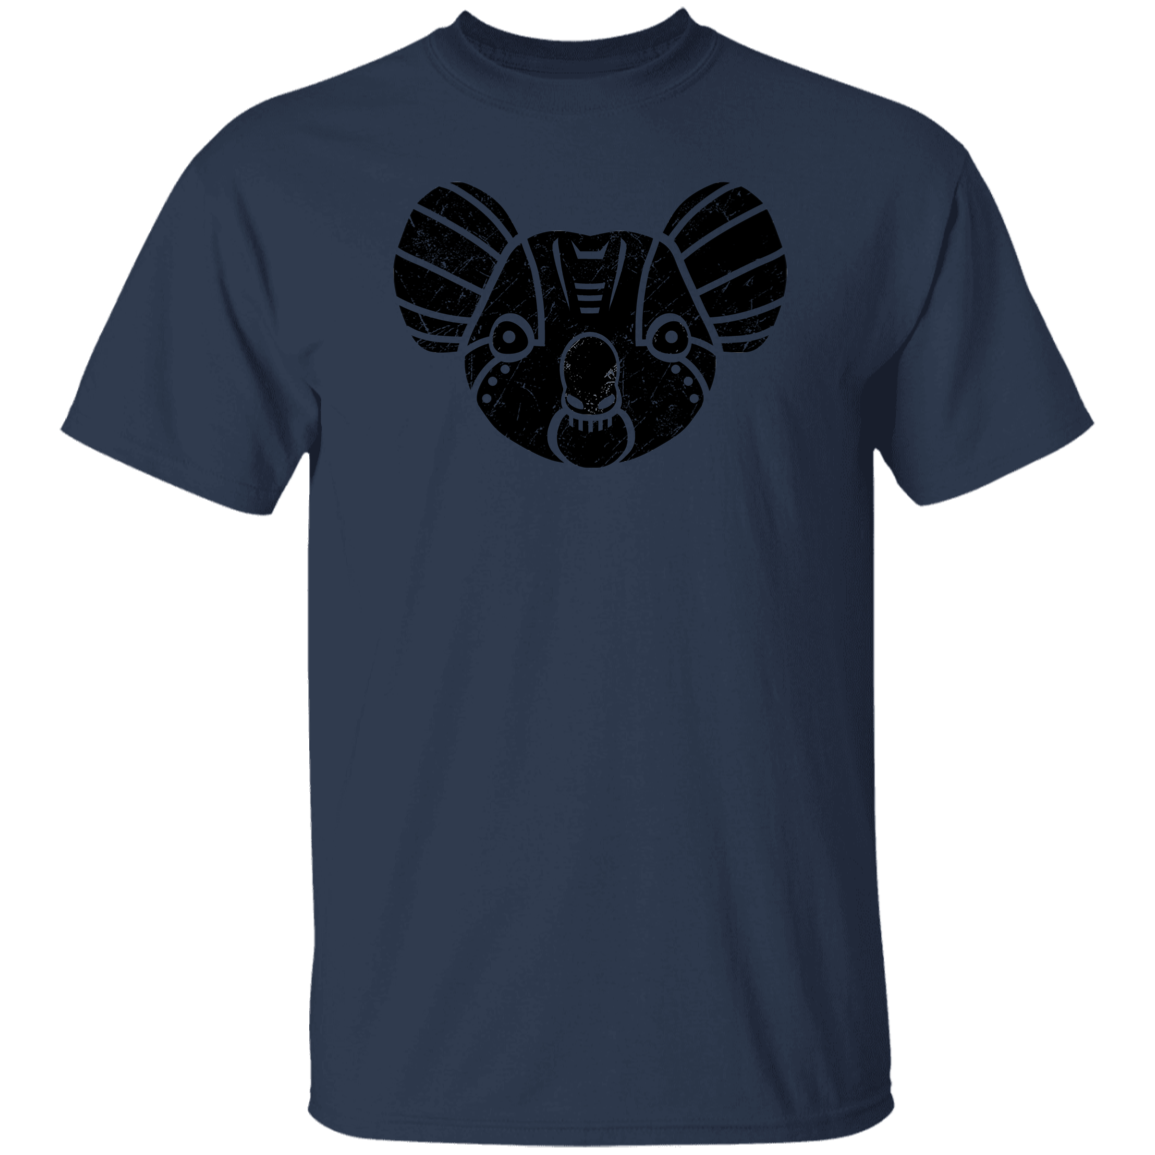 Black Distressed Emblem T-Shirt for Kids (Koala/Everest)